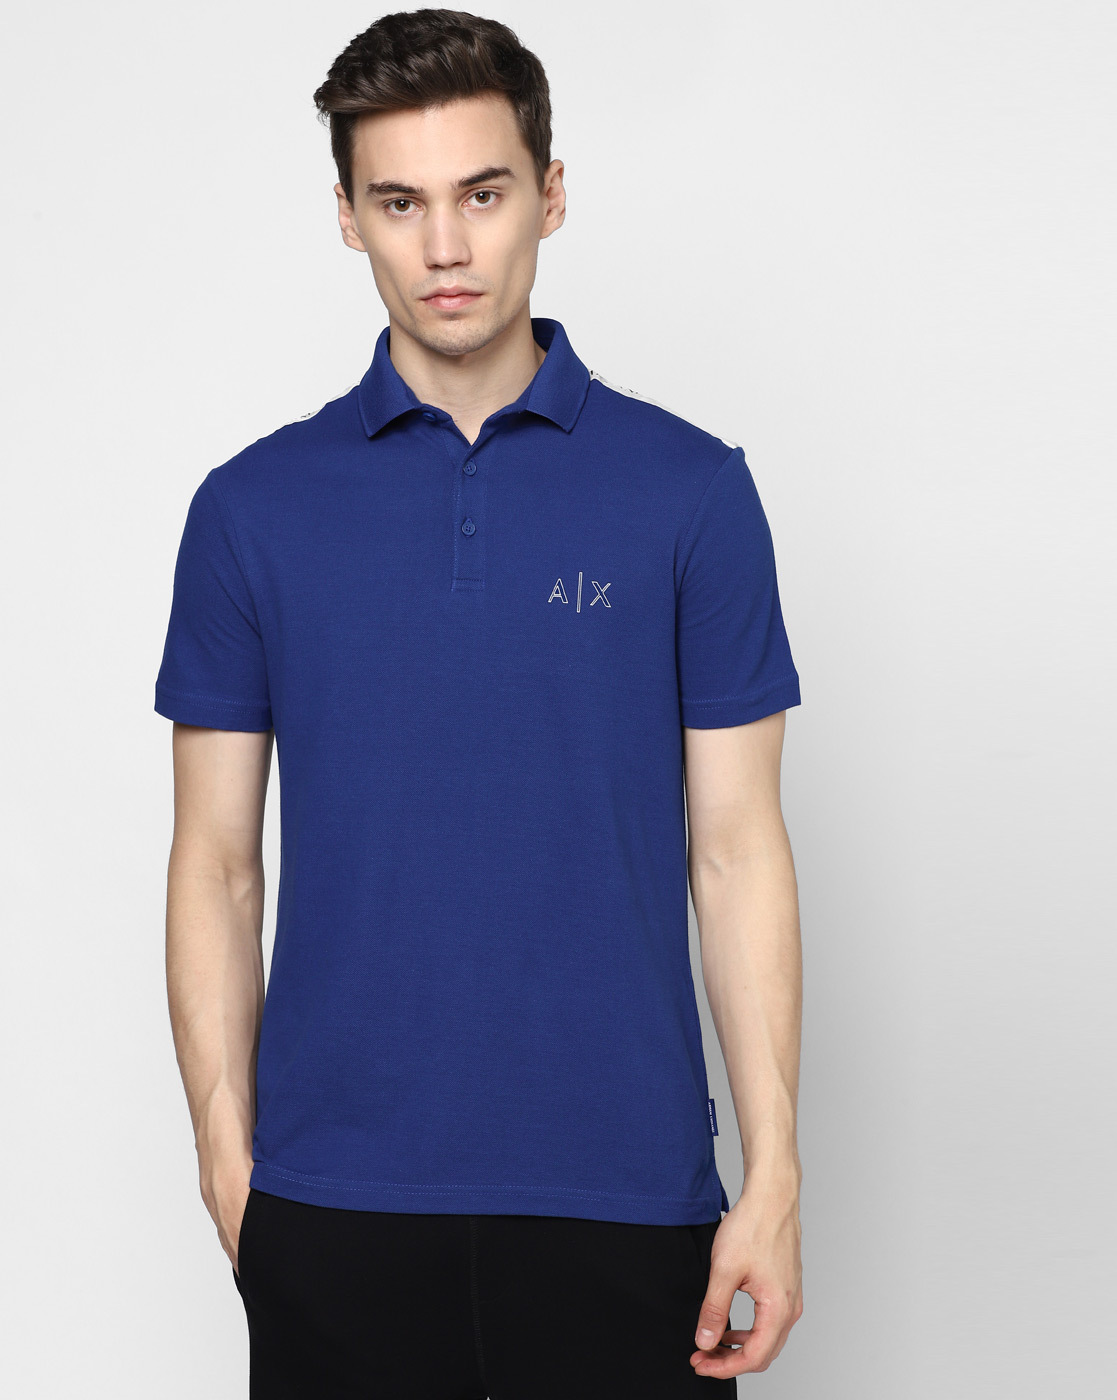 armani exchange blue t shirt